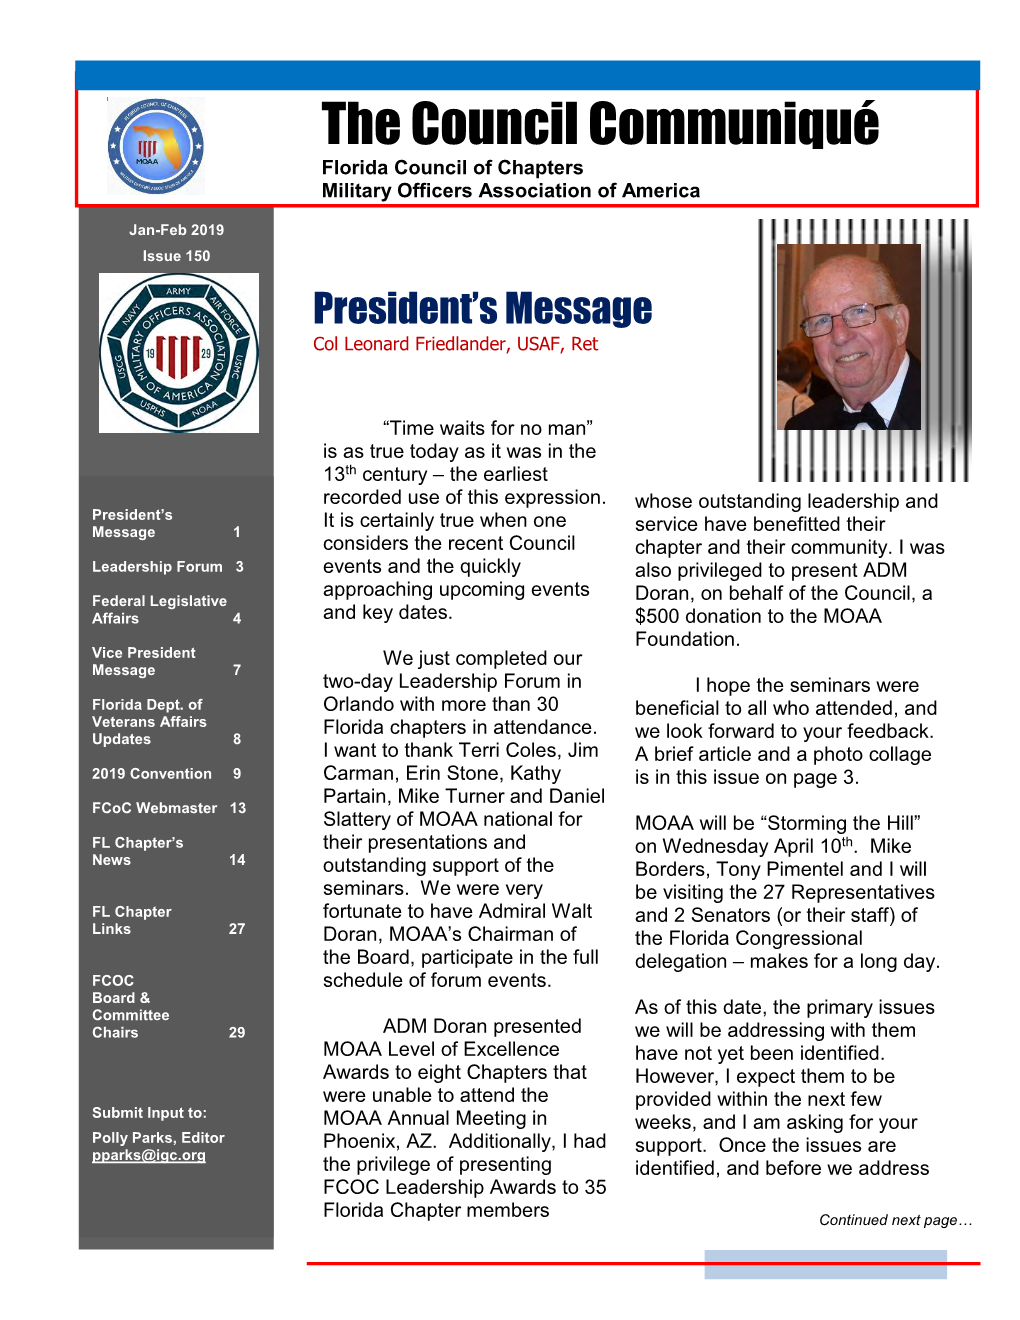 Feb 2019 Issue 150 President’S Message Col Leonard Friedlander, USAF, Ret